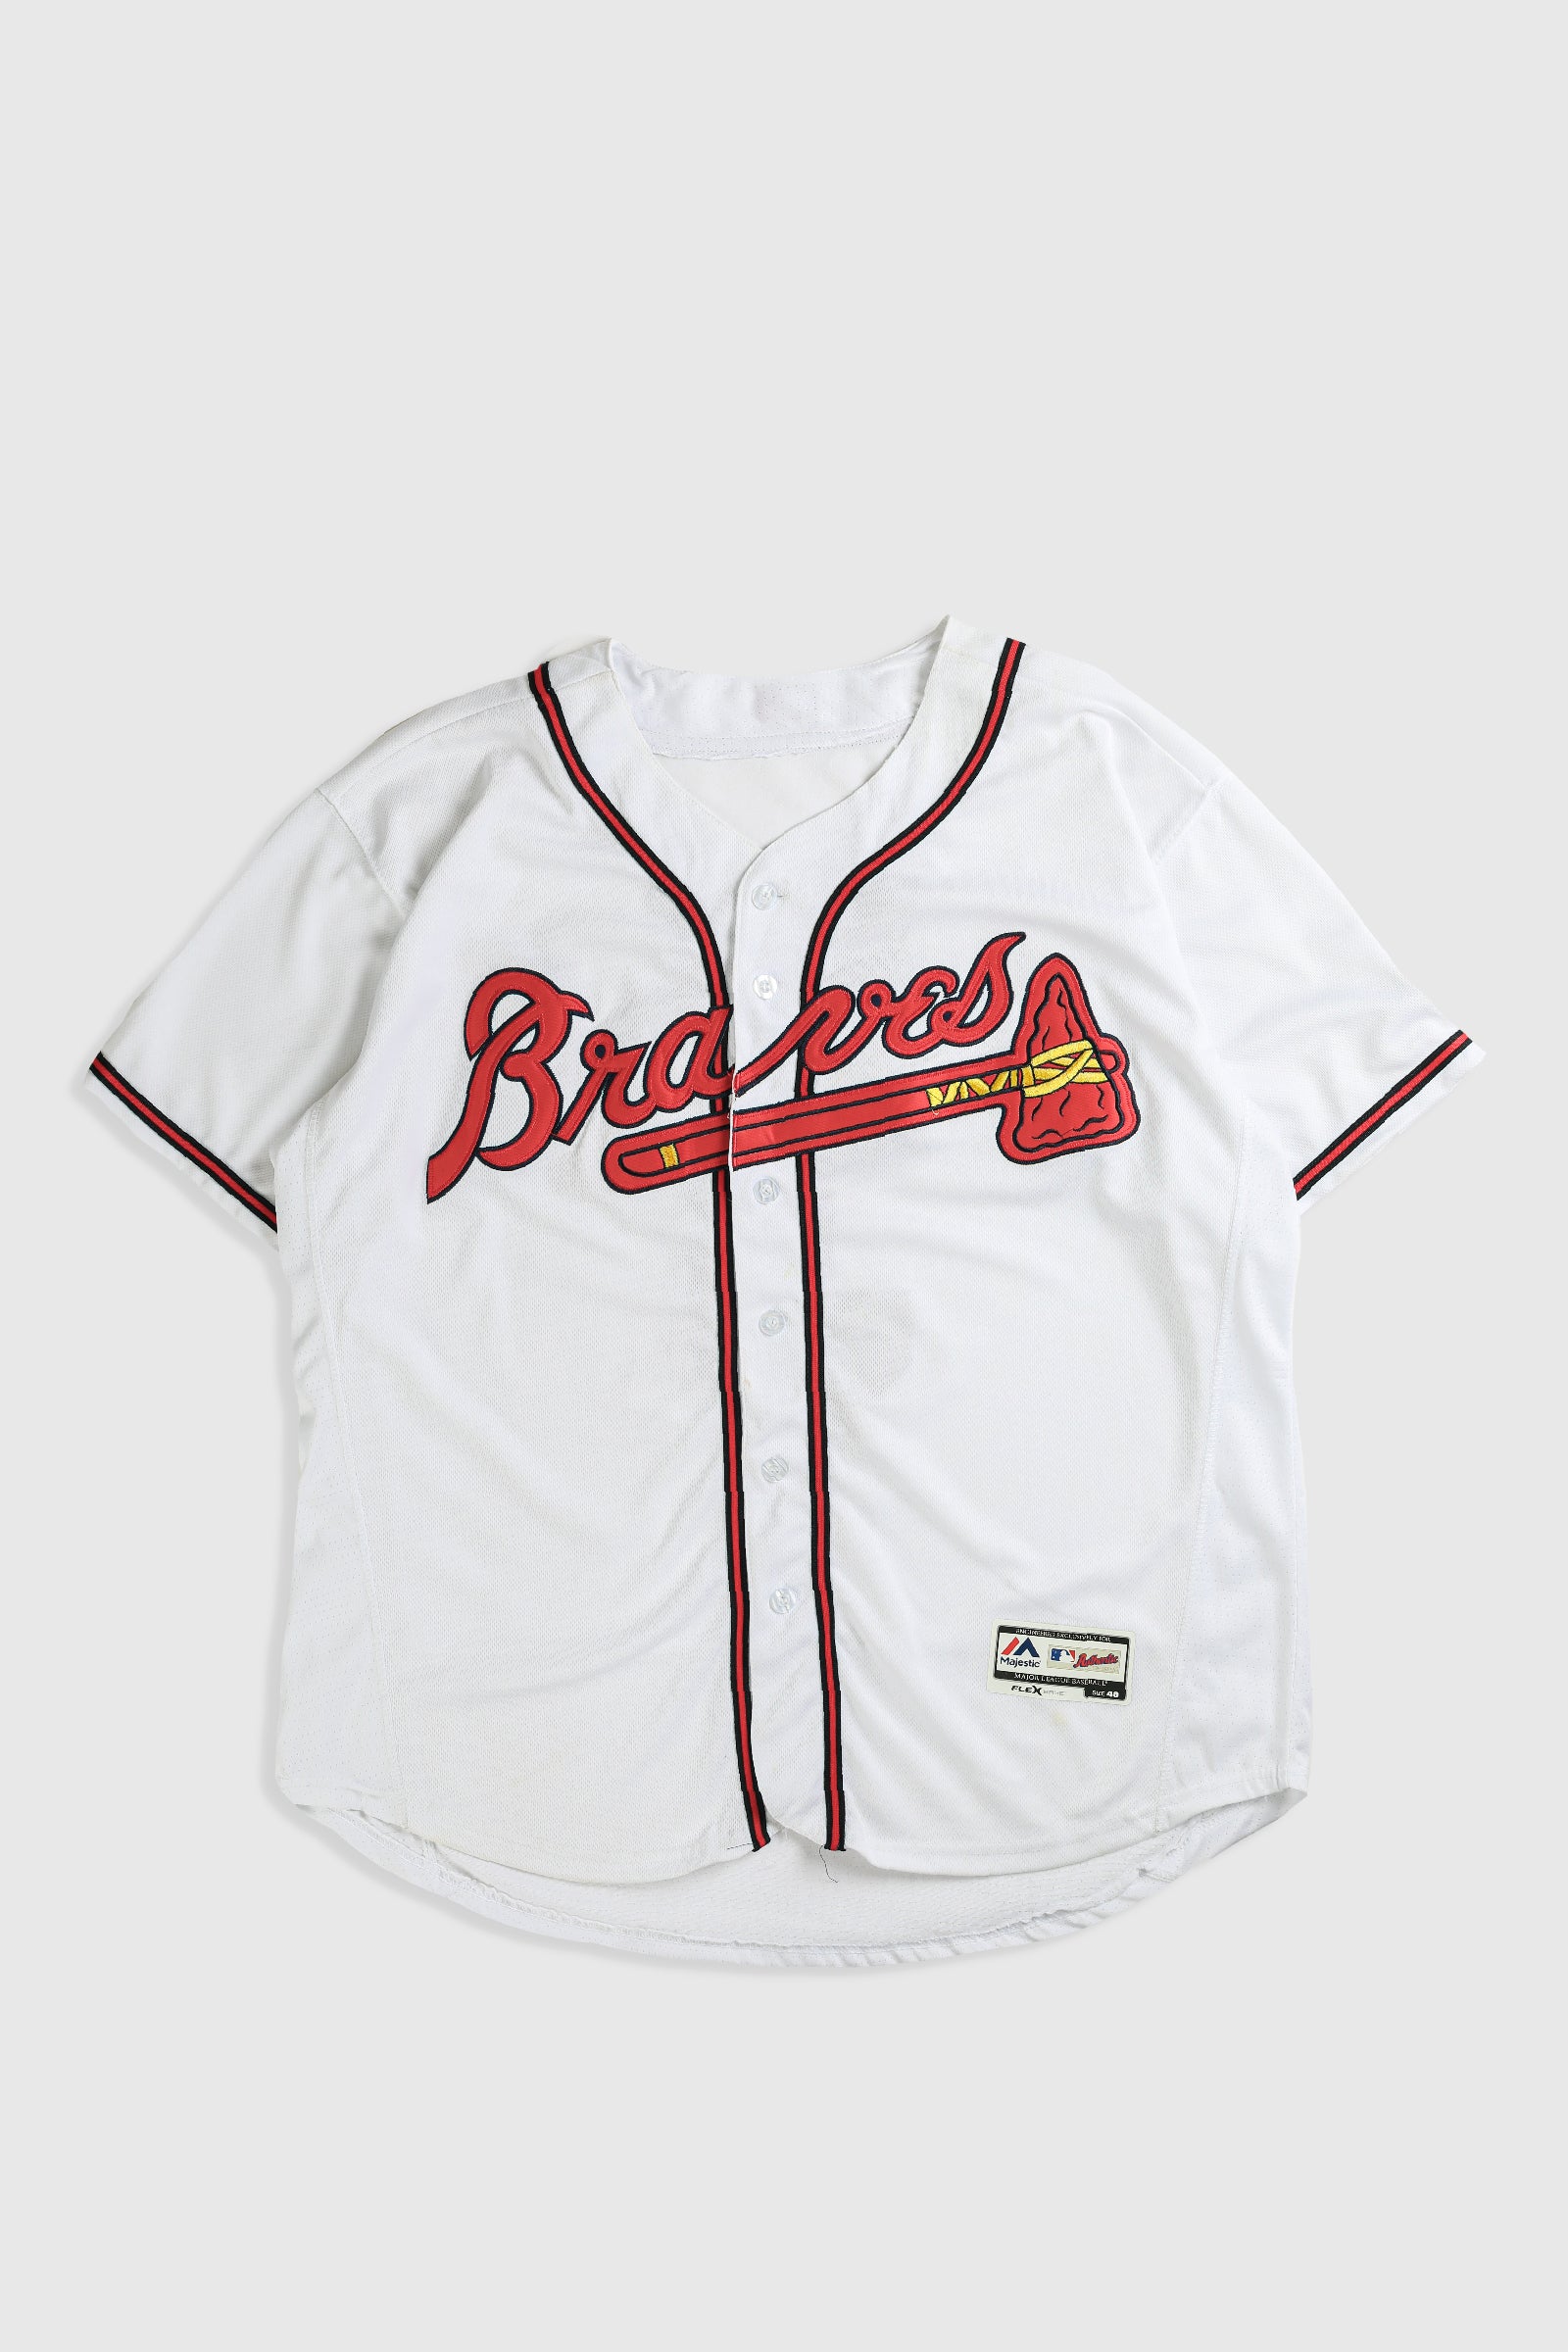 Braves Baseball Unisex Jersey Short Sleeve Tee 